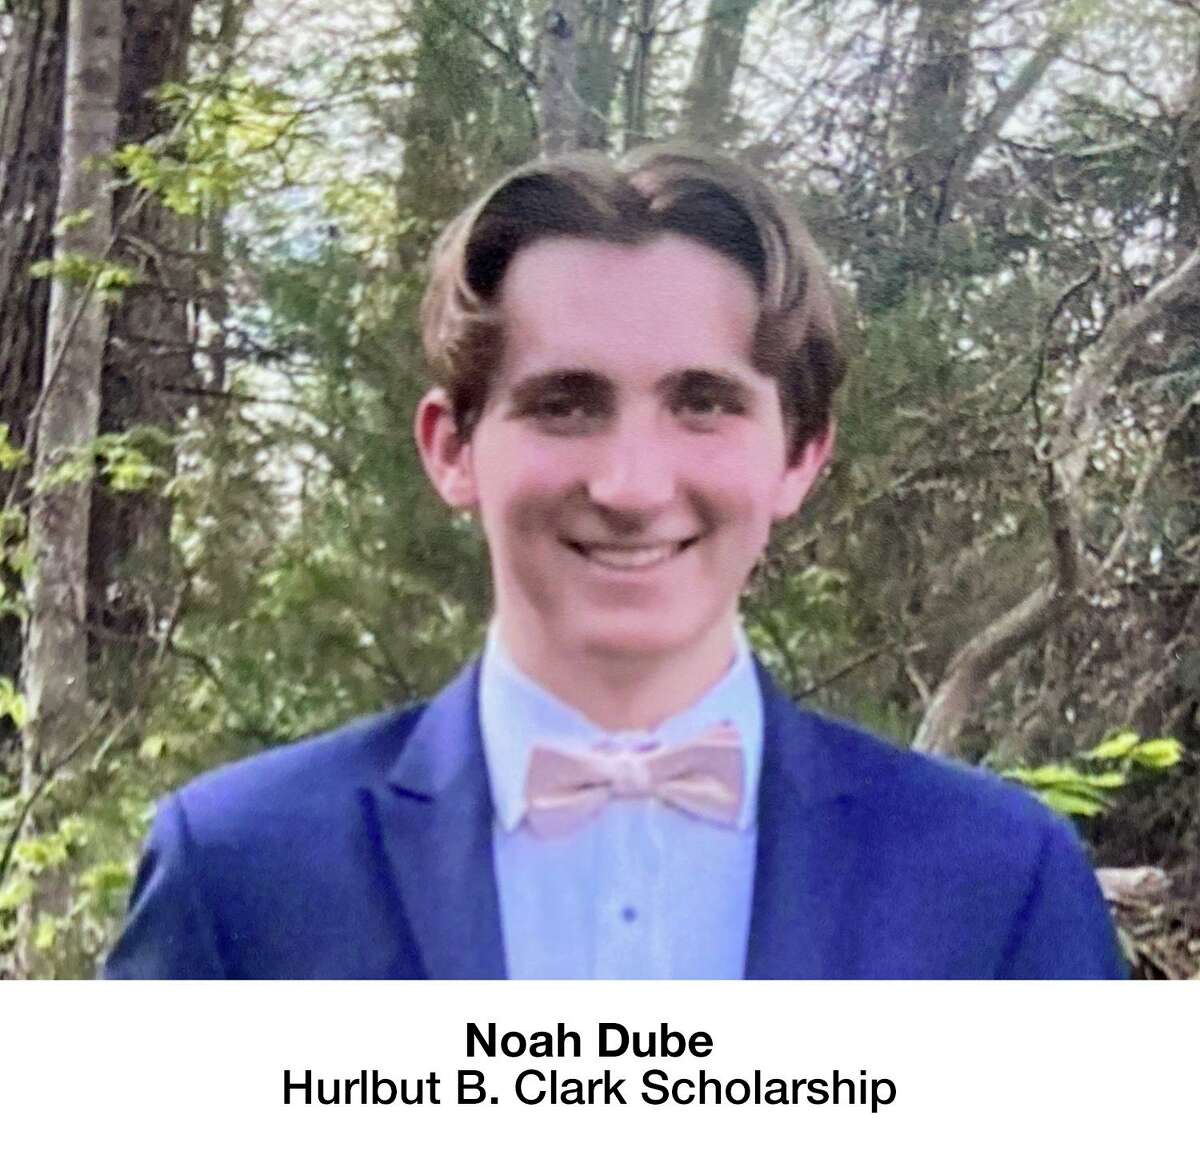 Noah Dube received the Hurlbut G. Clark Scholarship award.